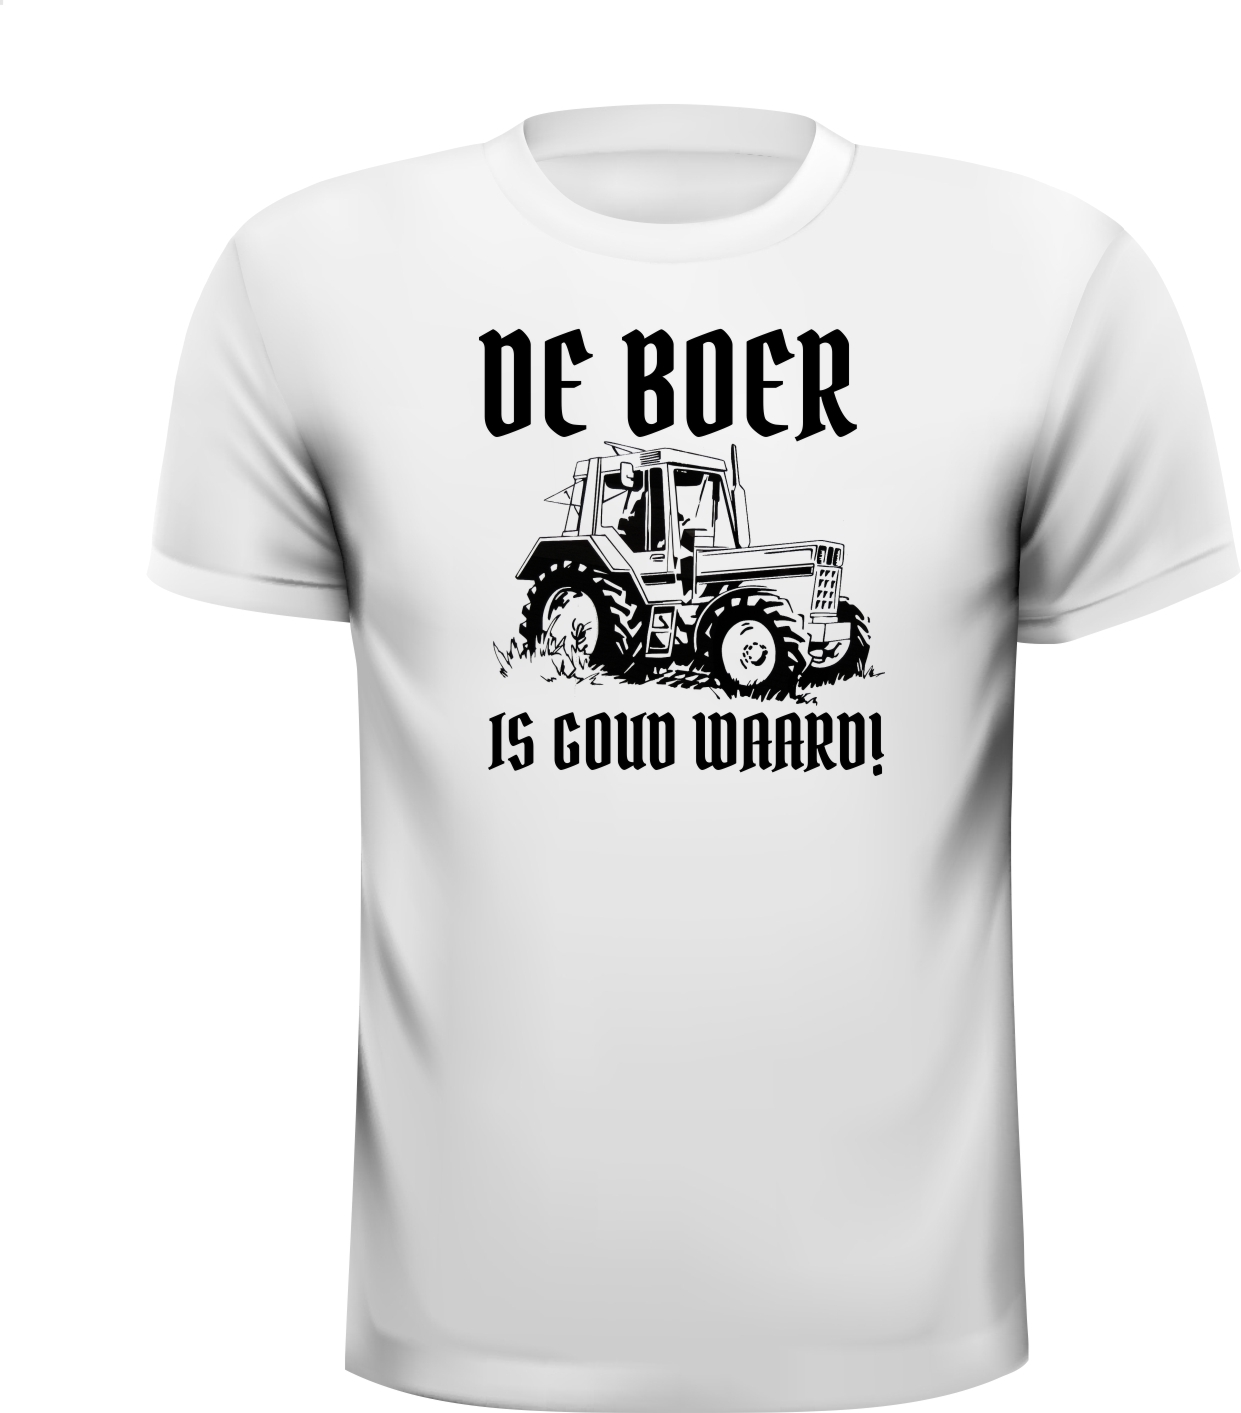 Boeren T-shirt de boer is goud waard!